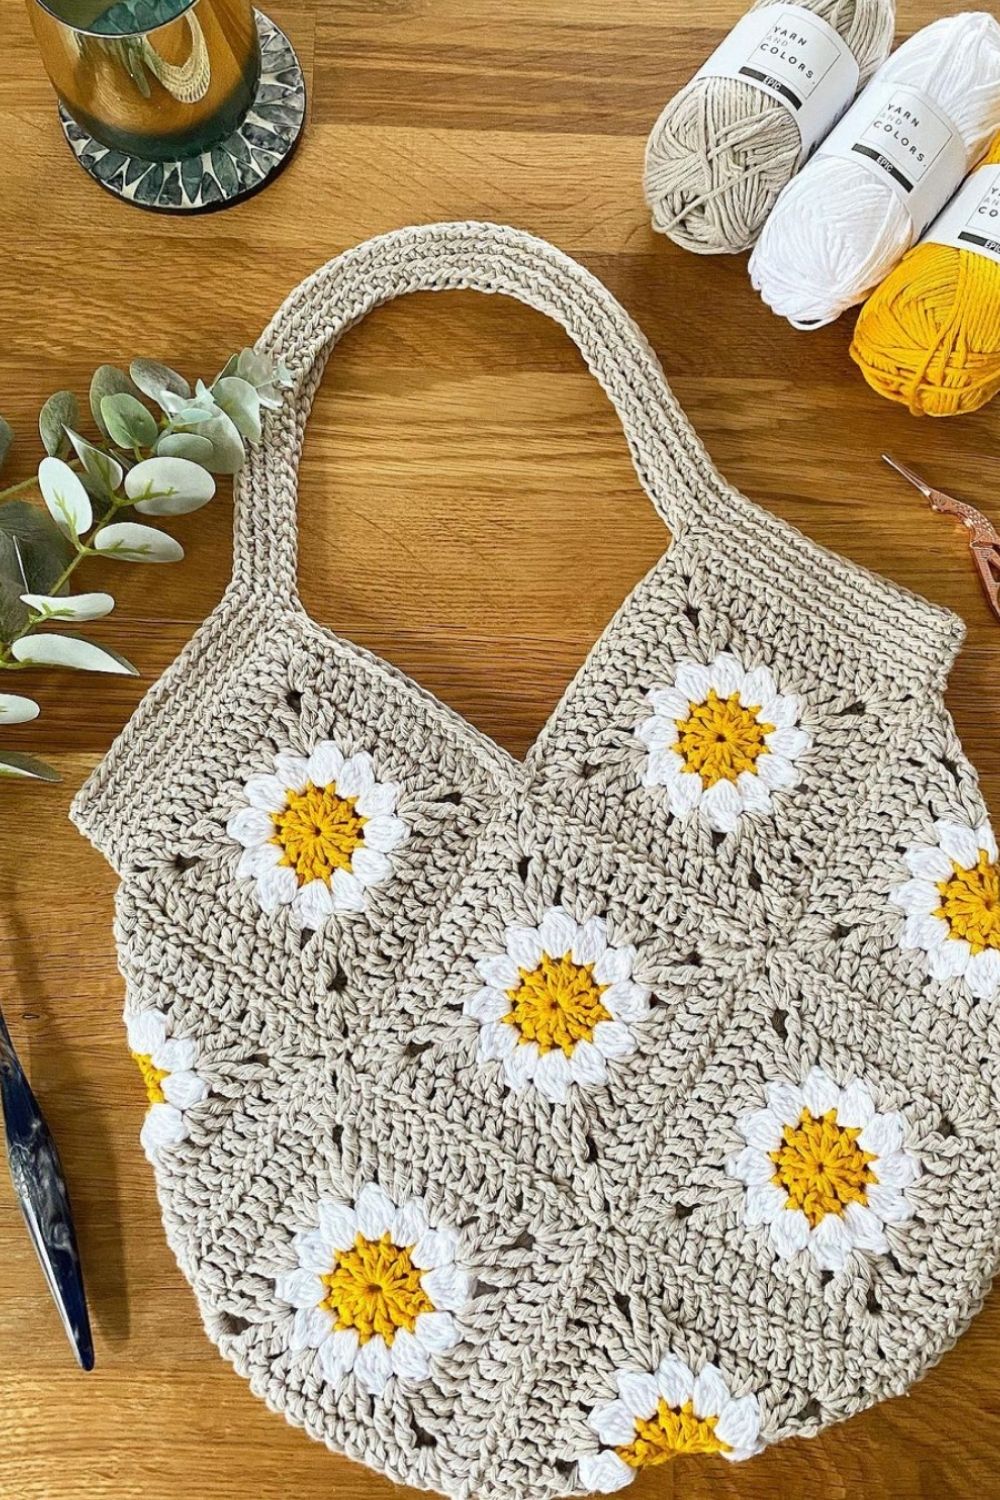 Handmade Crochet Bags prices